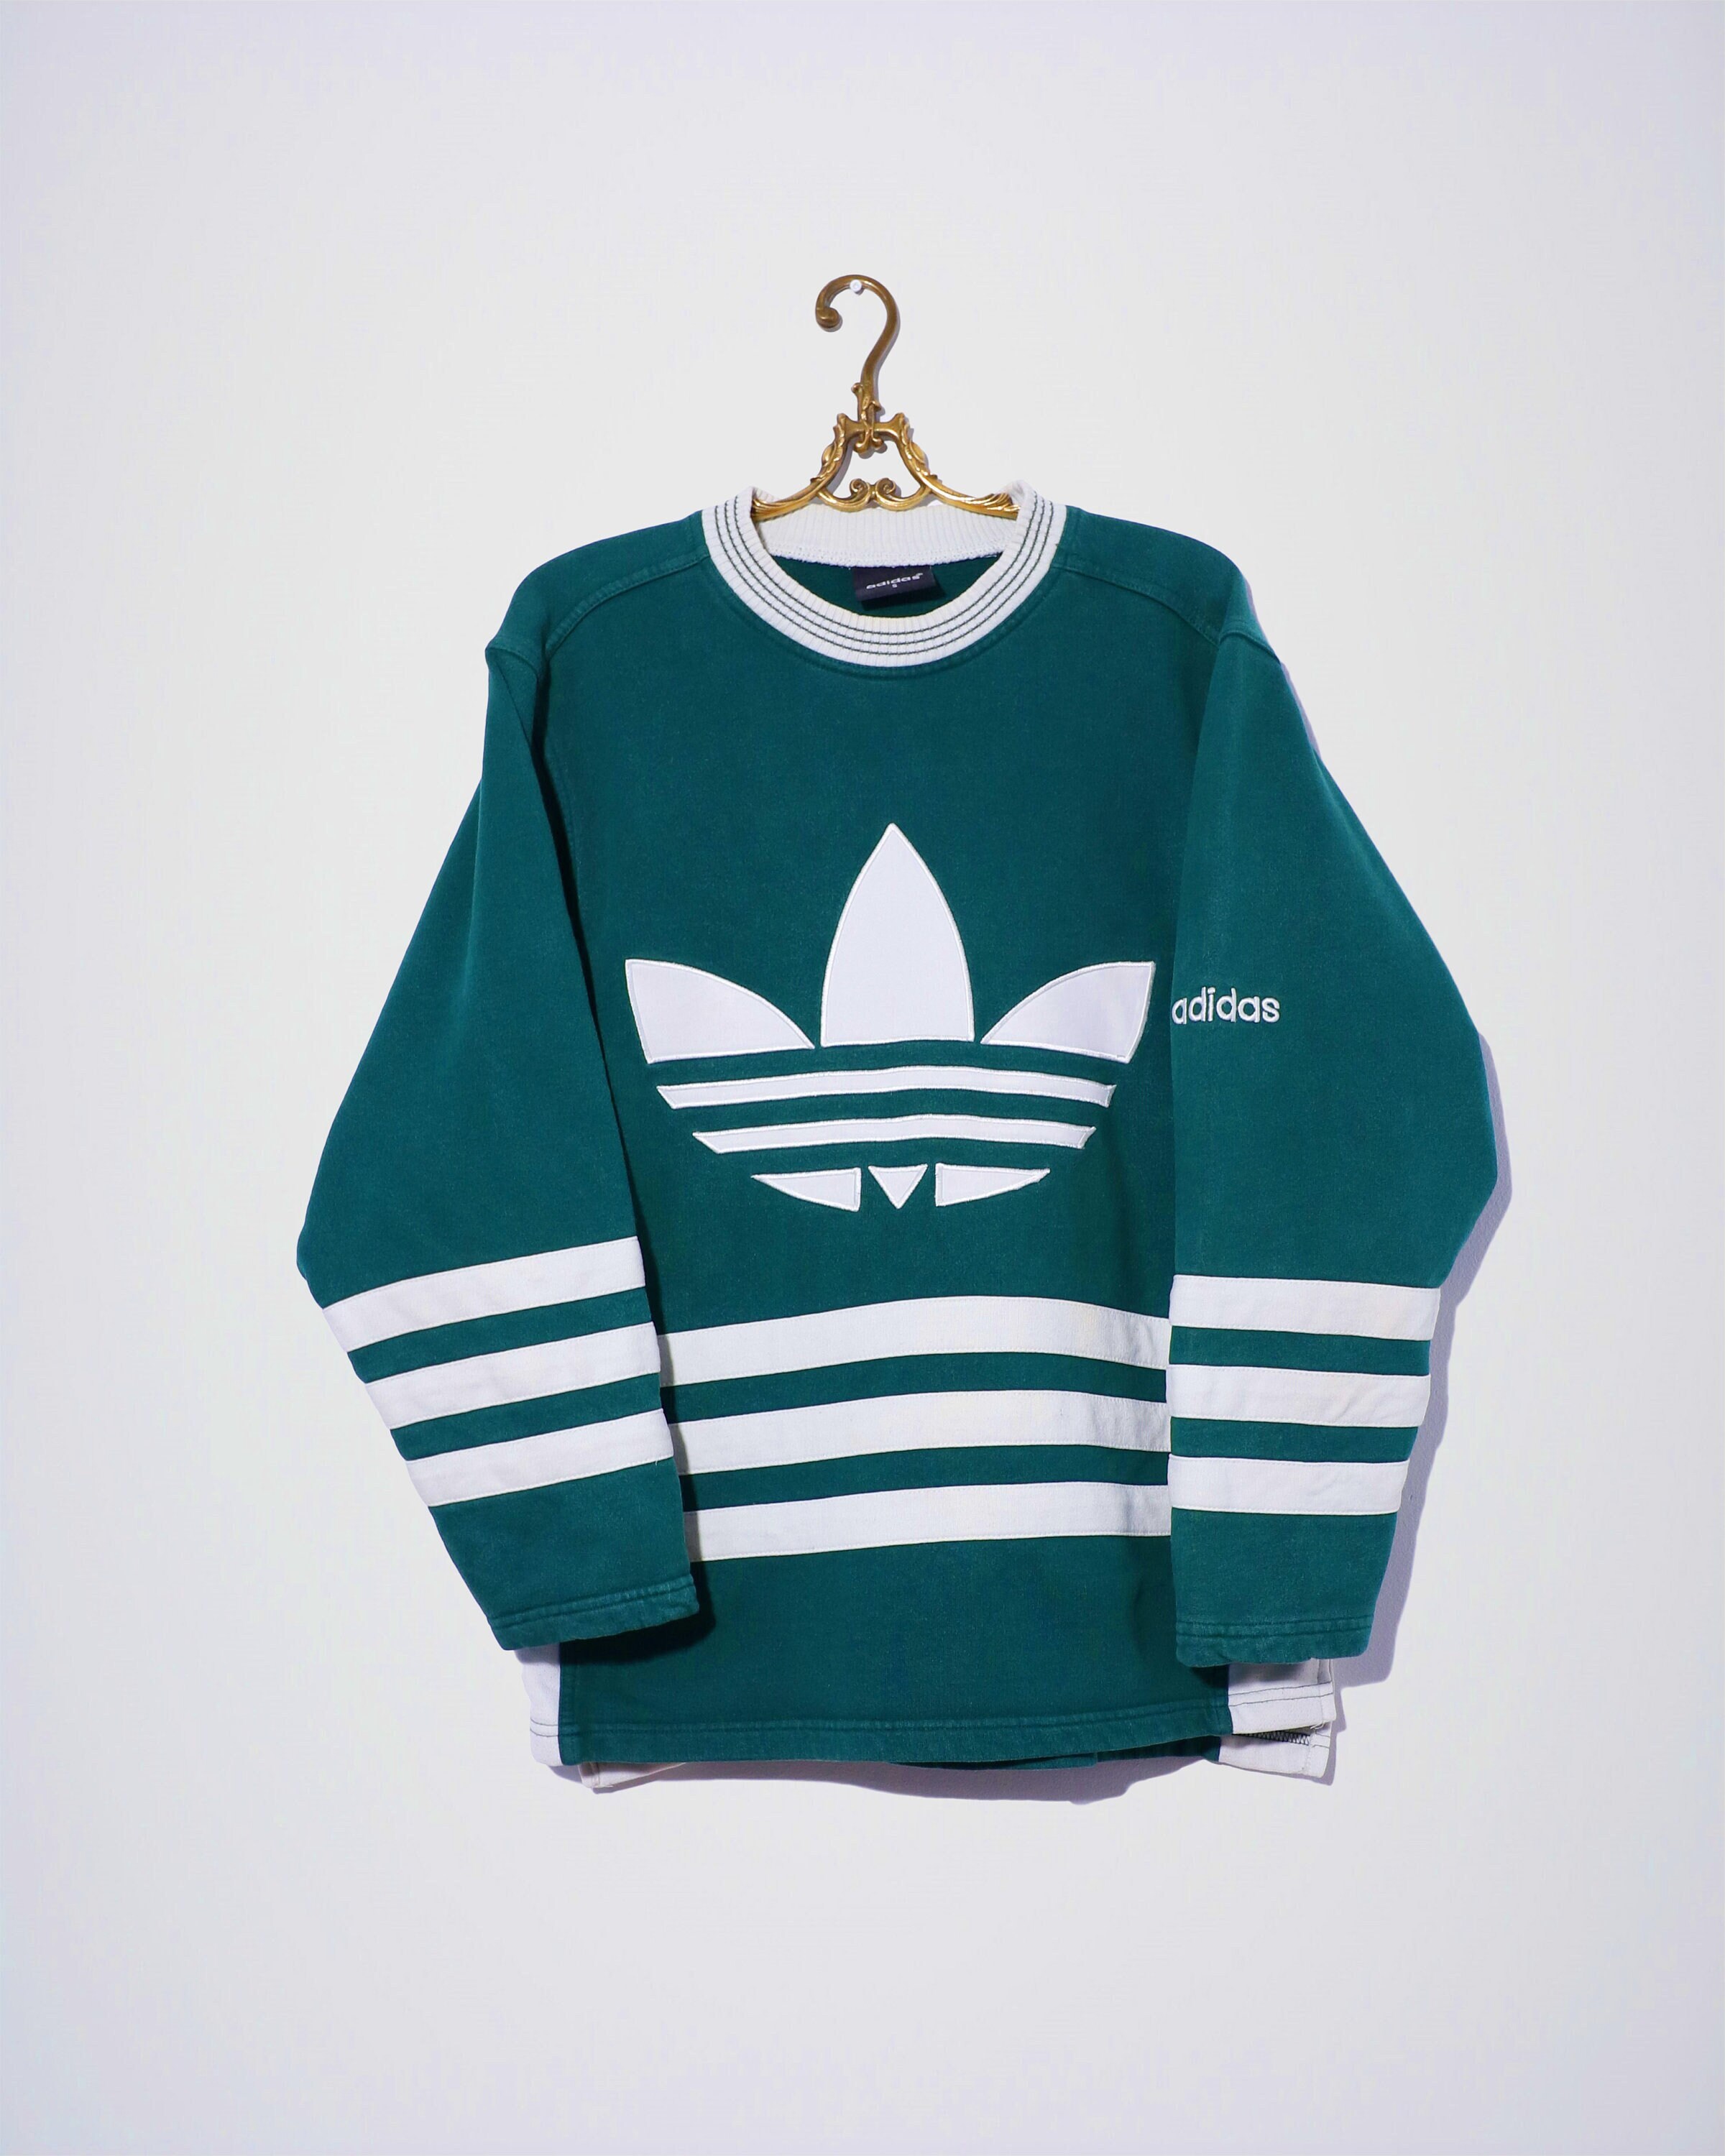 Adidas Vintage Rare Sweatshirt 90s Big Green - Etsy